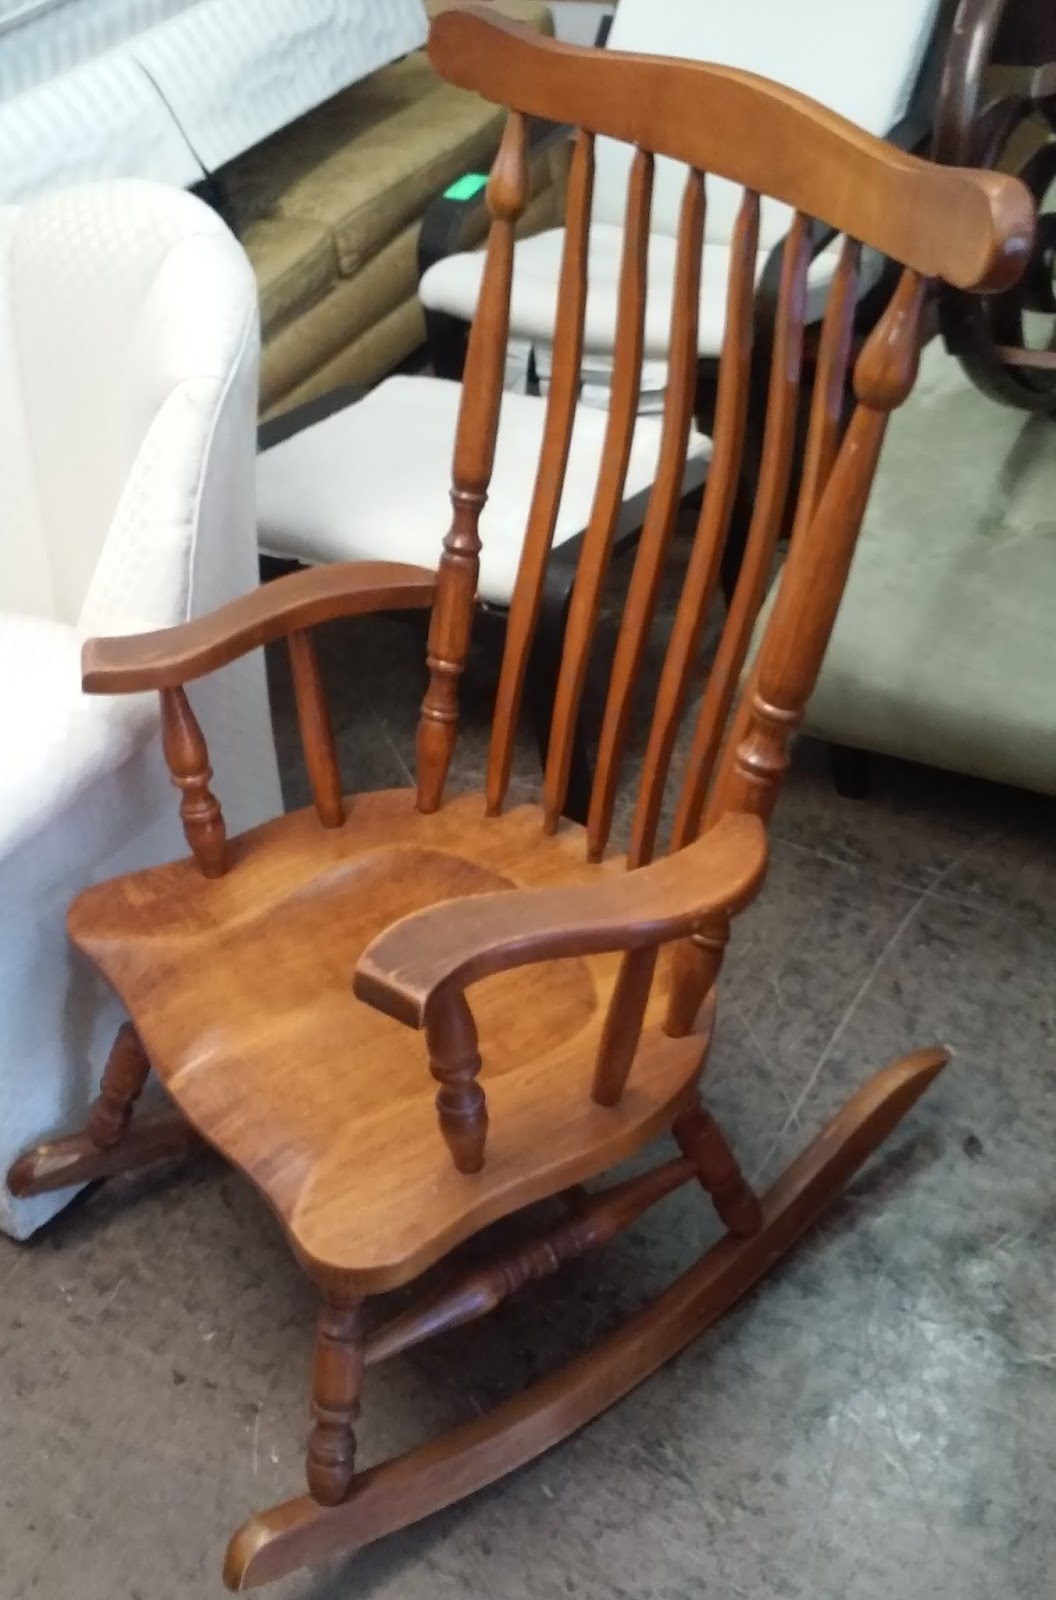 UHURU FURNITURE & COLLECTIBLES: SOLD Oversized Hardwood Rocking Chair - $75